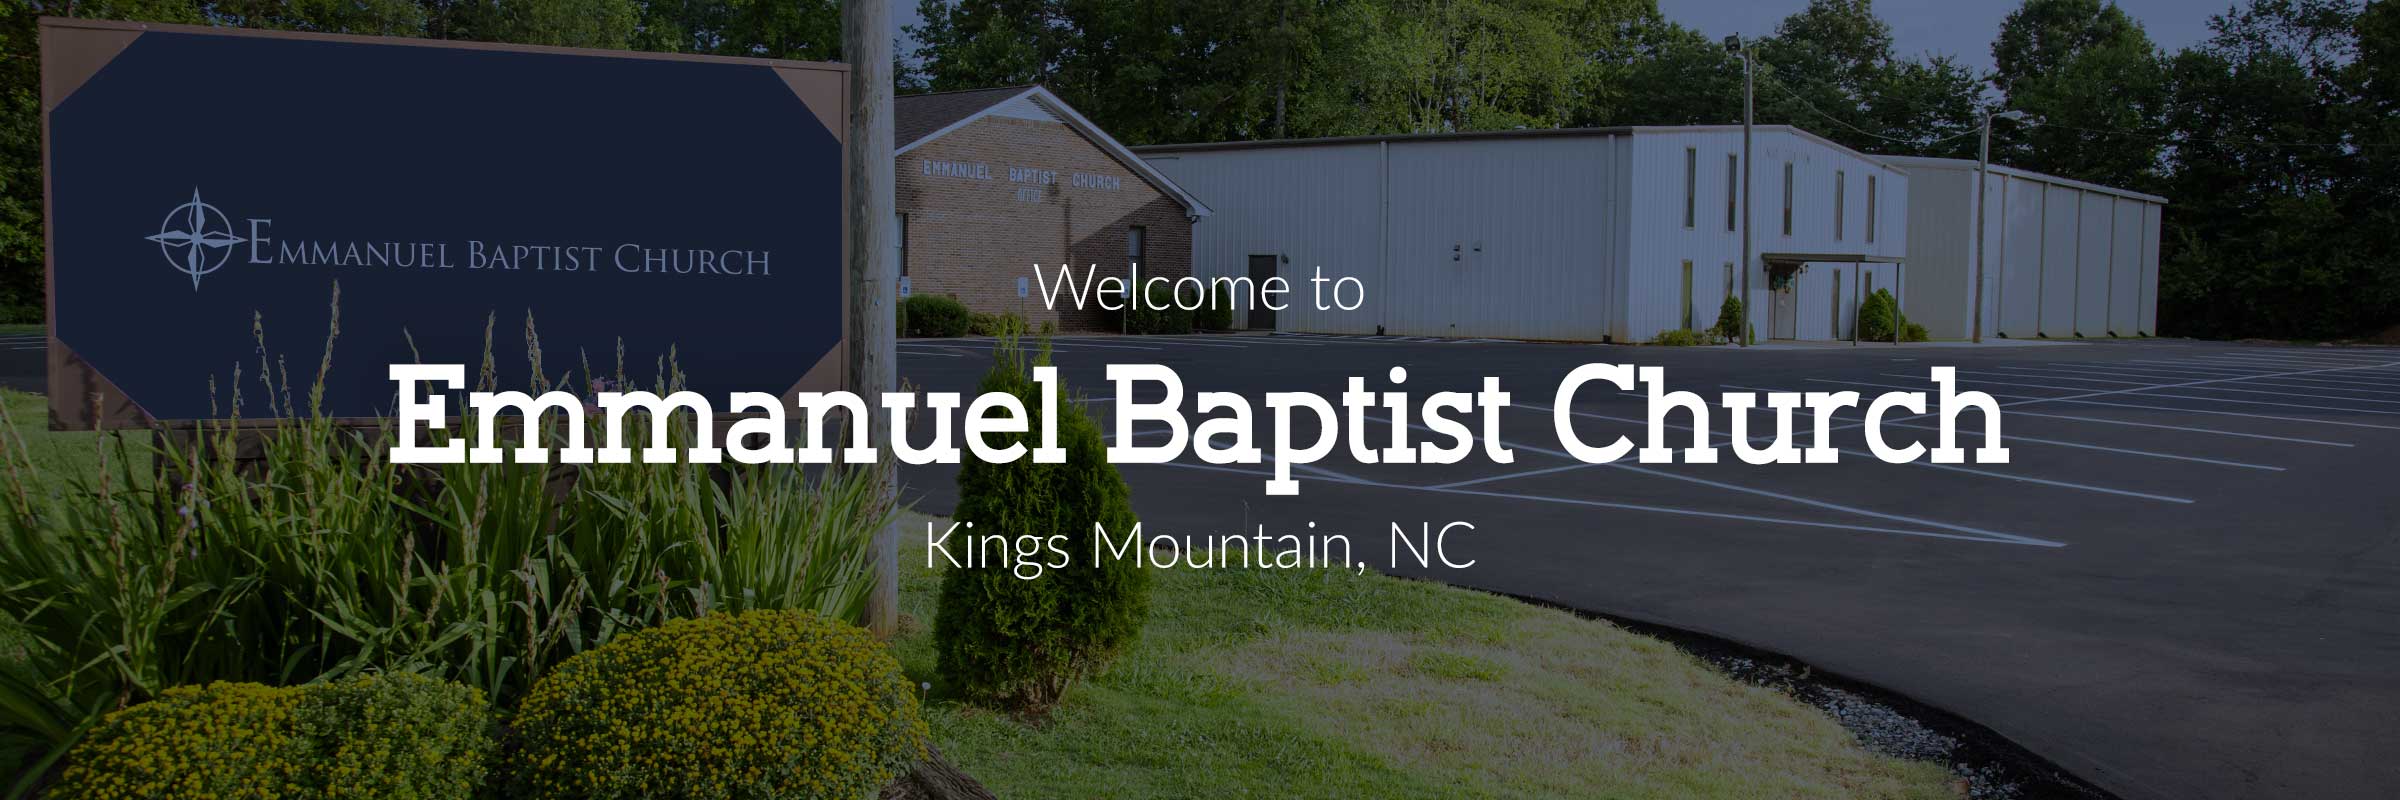 Emmanuel Baptist Church Kings Mountain, NC